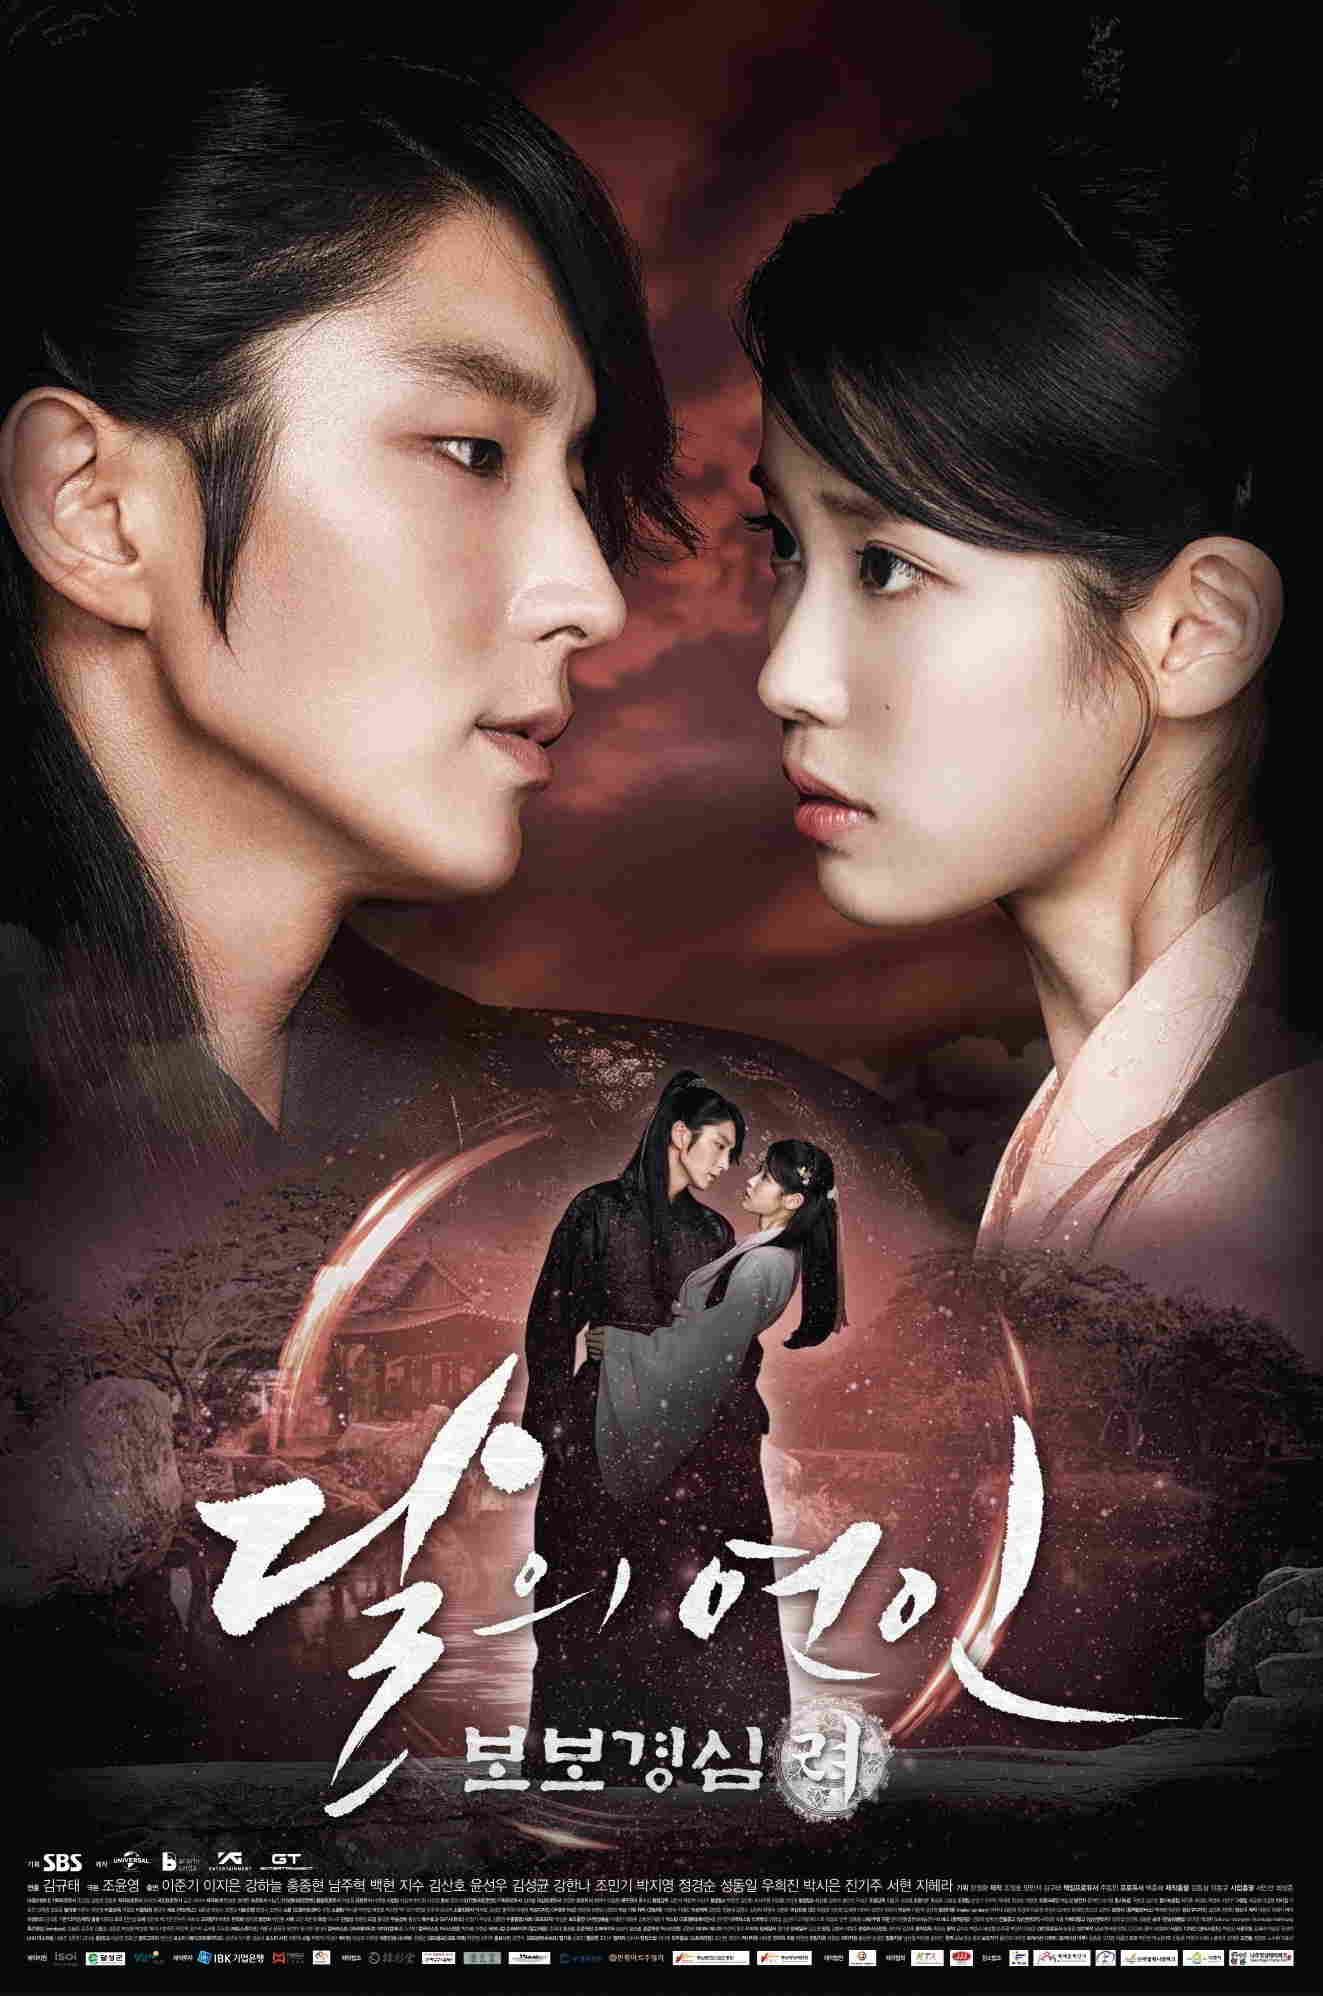 Moon Lovers: Scarlet Heart Ryeo - Cast, Summary, Synopsis